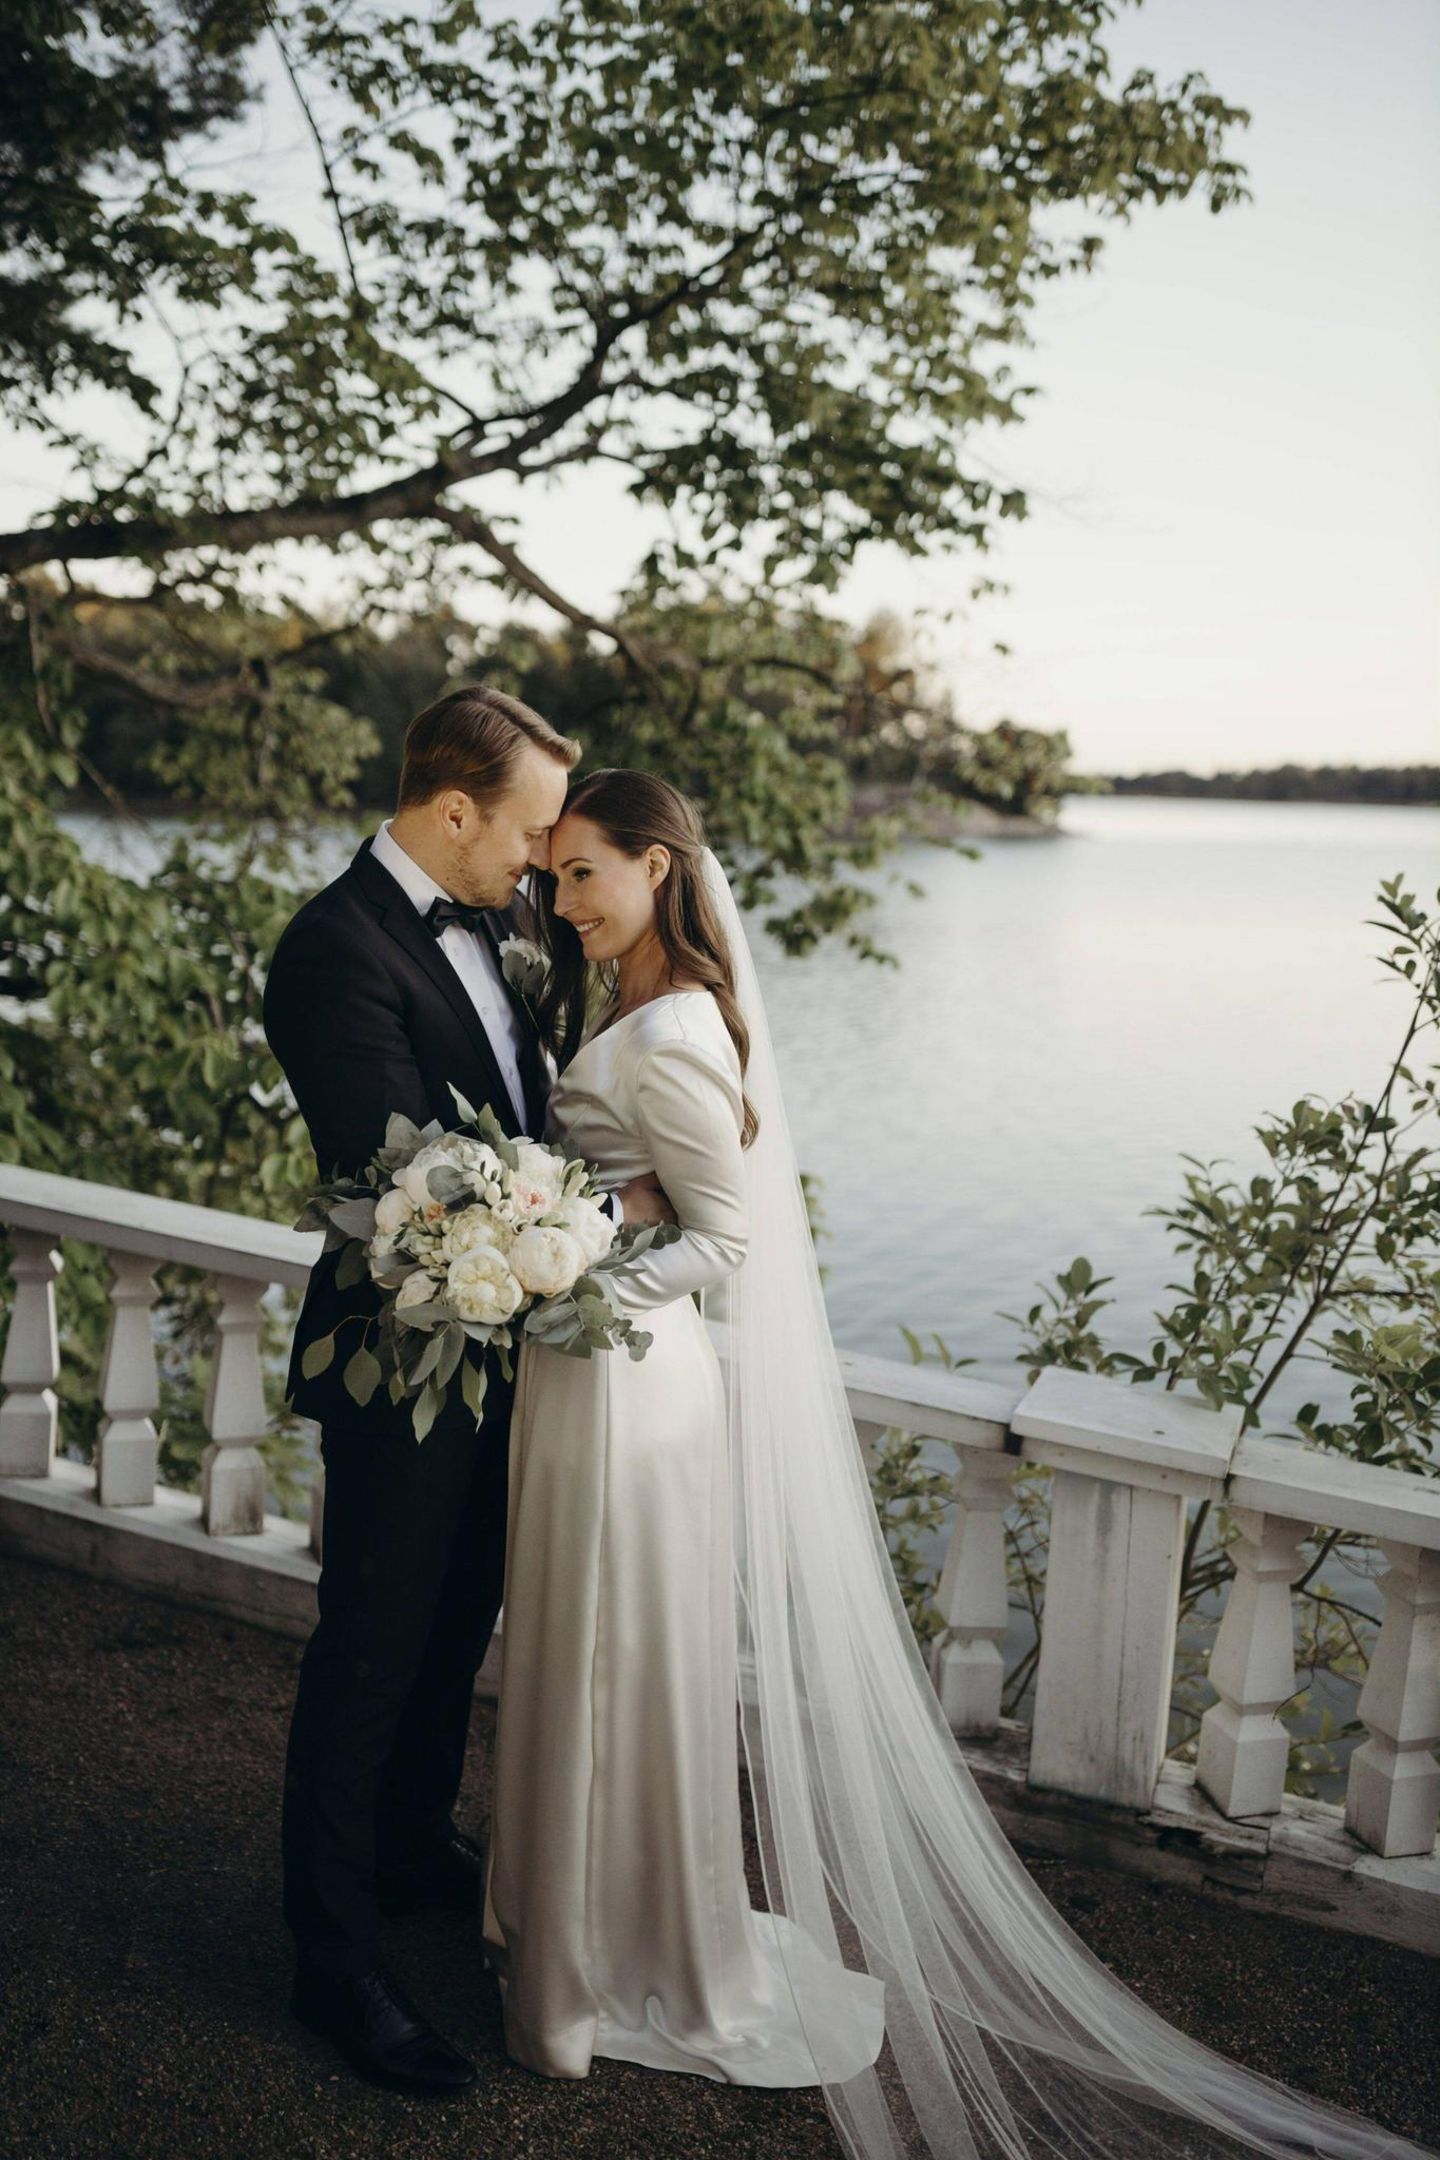 Brautkleider der Stars:Sanna Marin und Markus Räikkönen